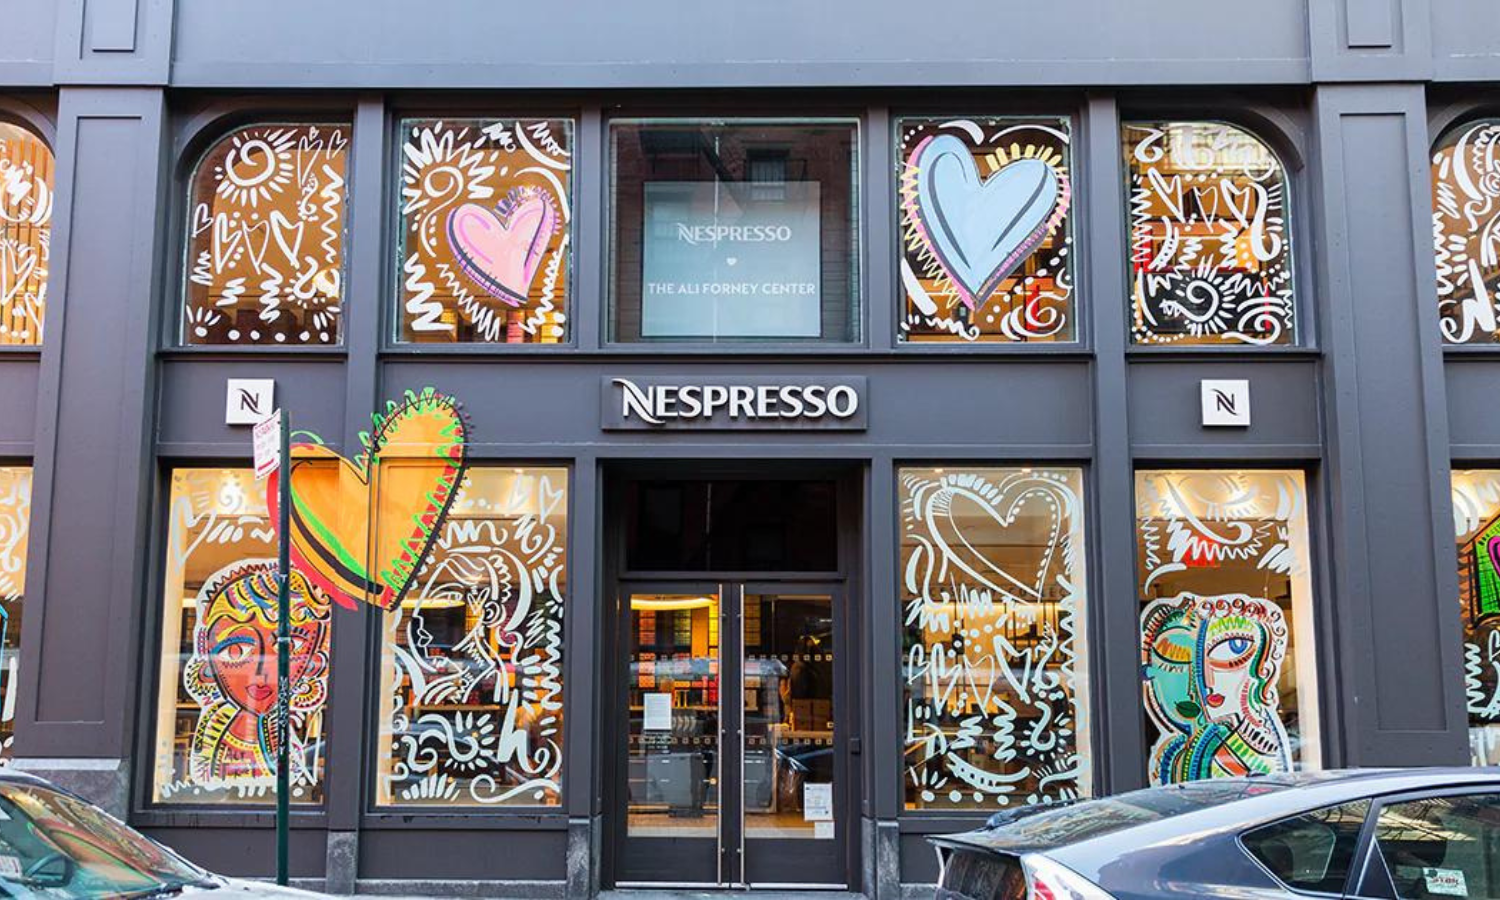 Nespresso serves up support Newsroom